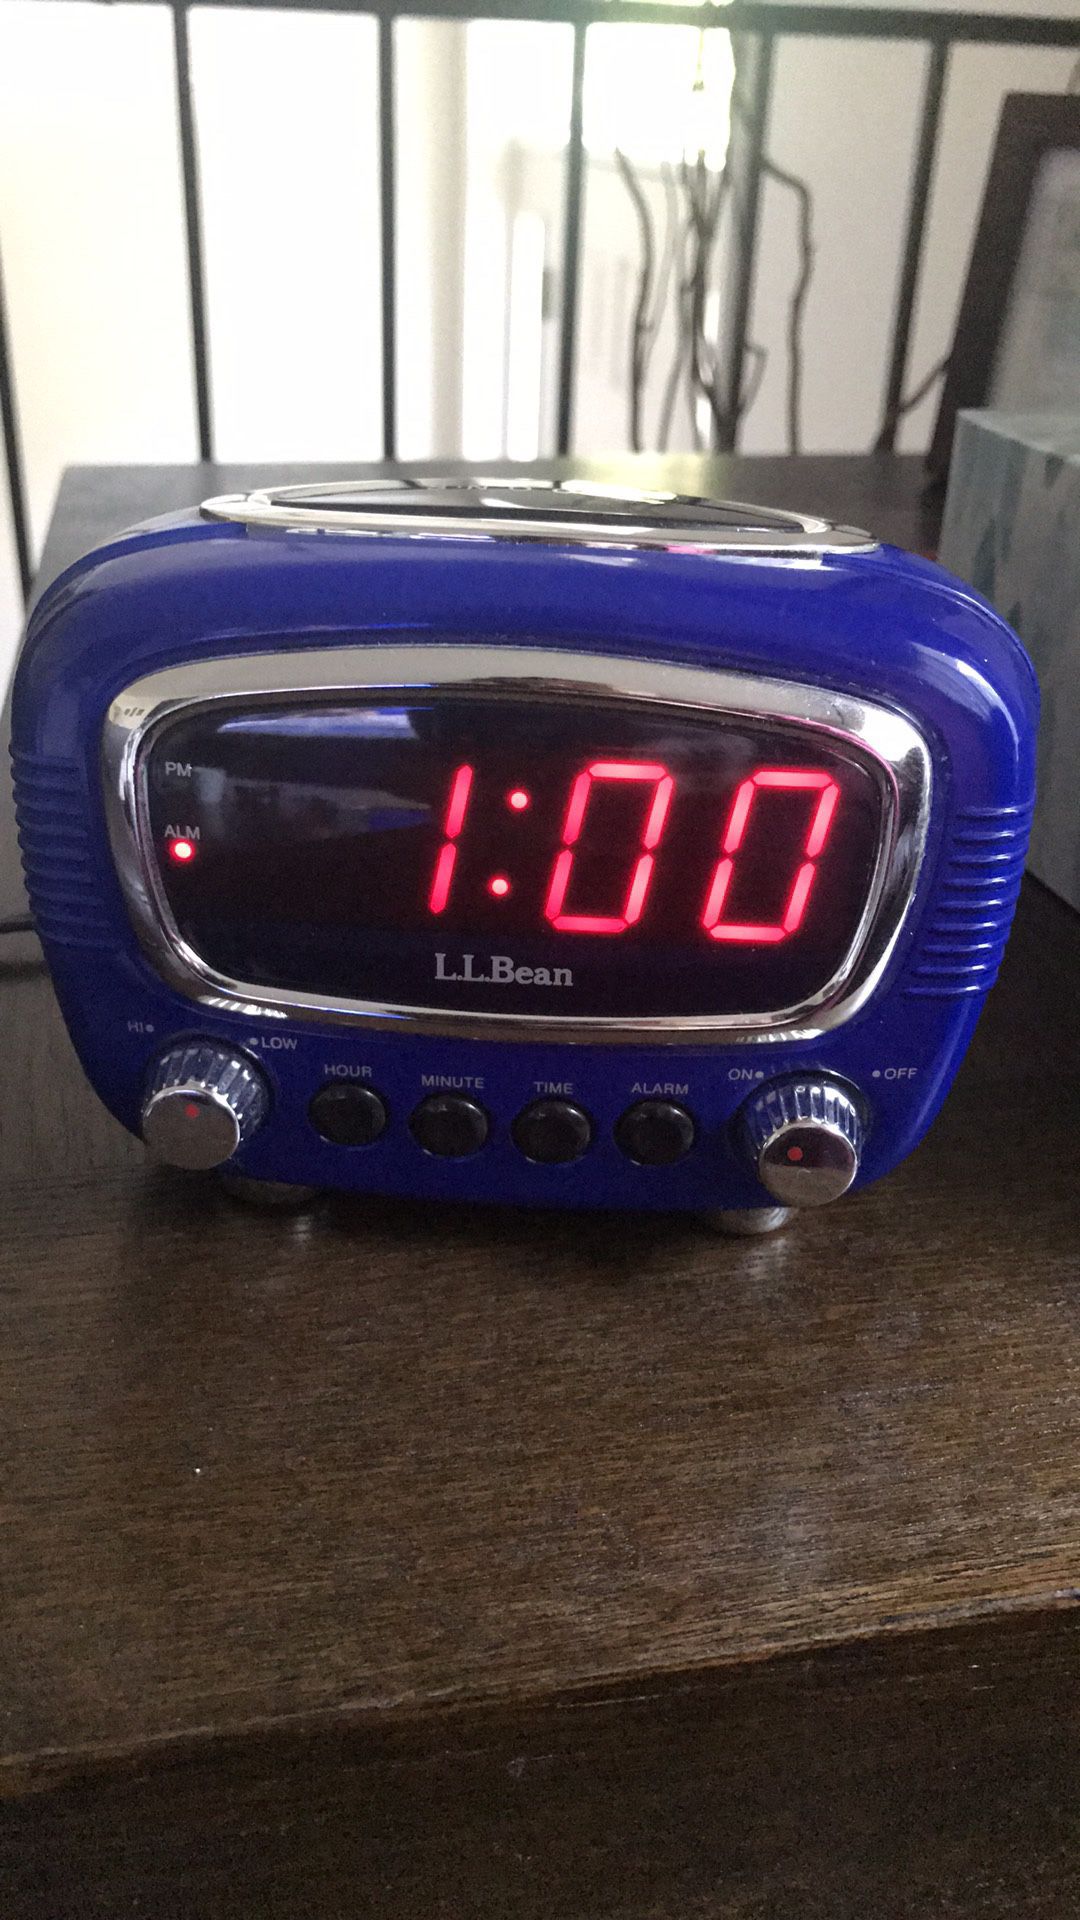 LL Bean Retro alarm clock